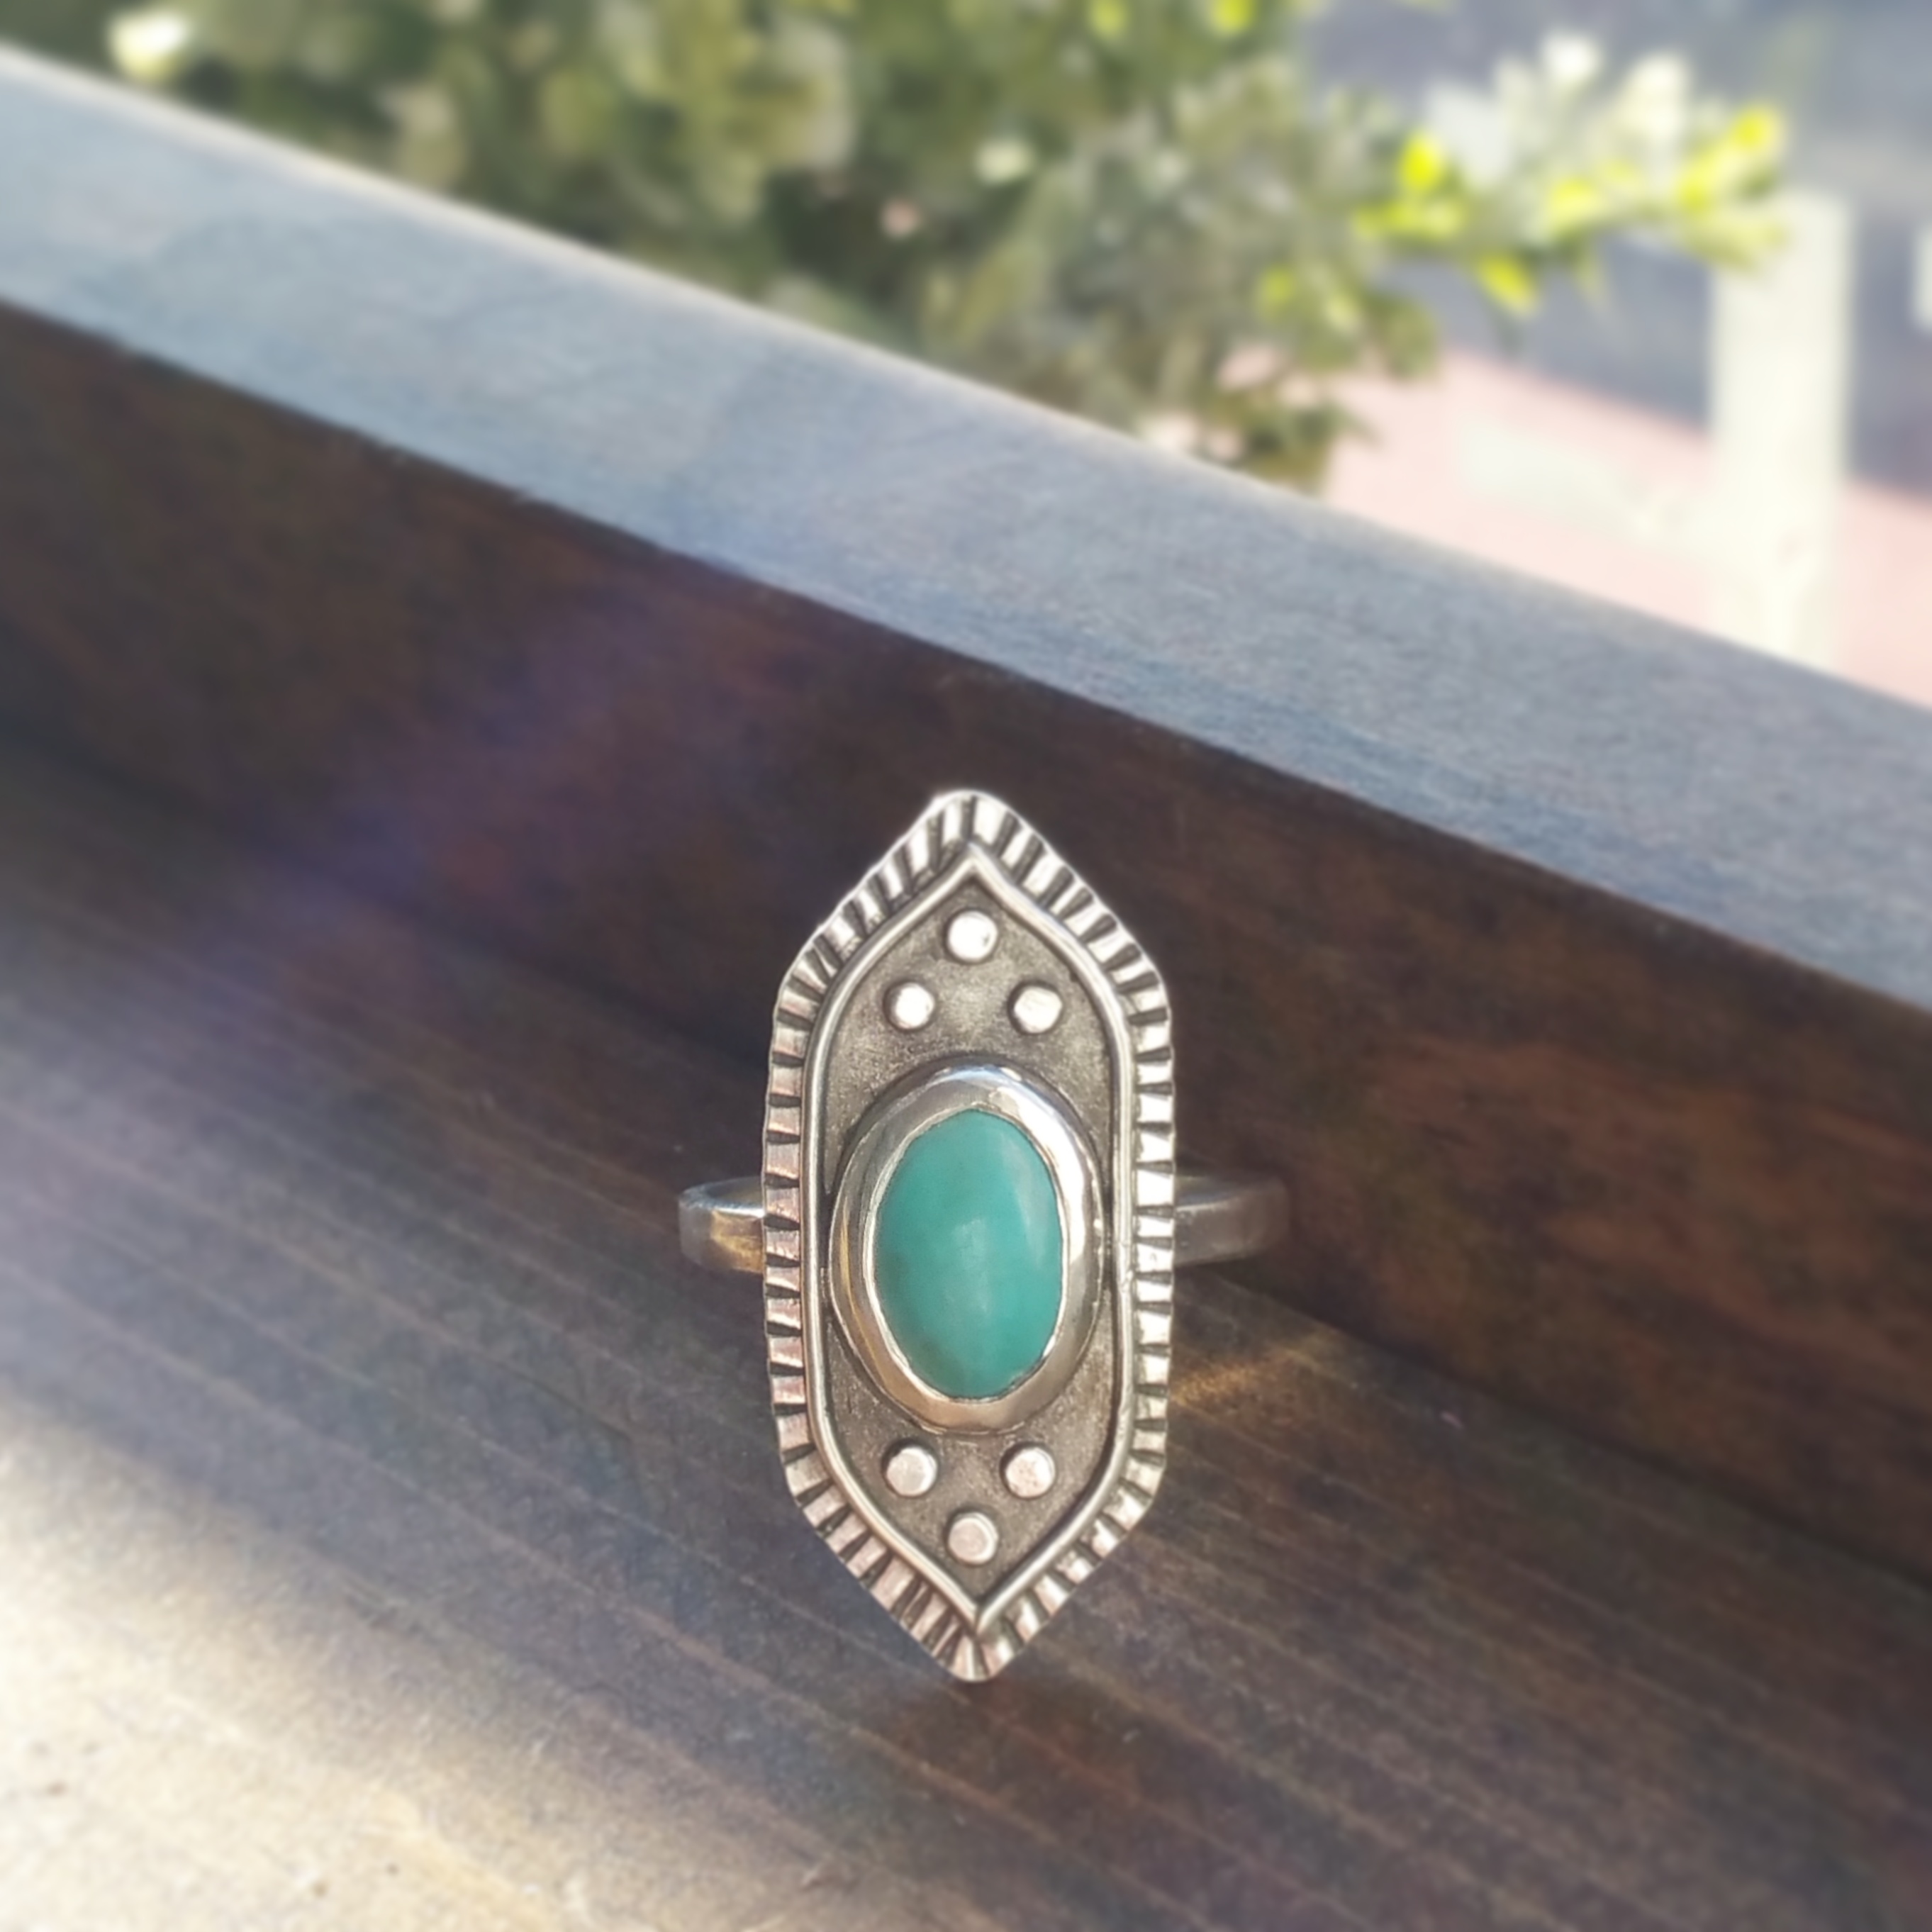 Moroccan-Lotus-flower-inspired-turquoise-ring